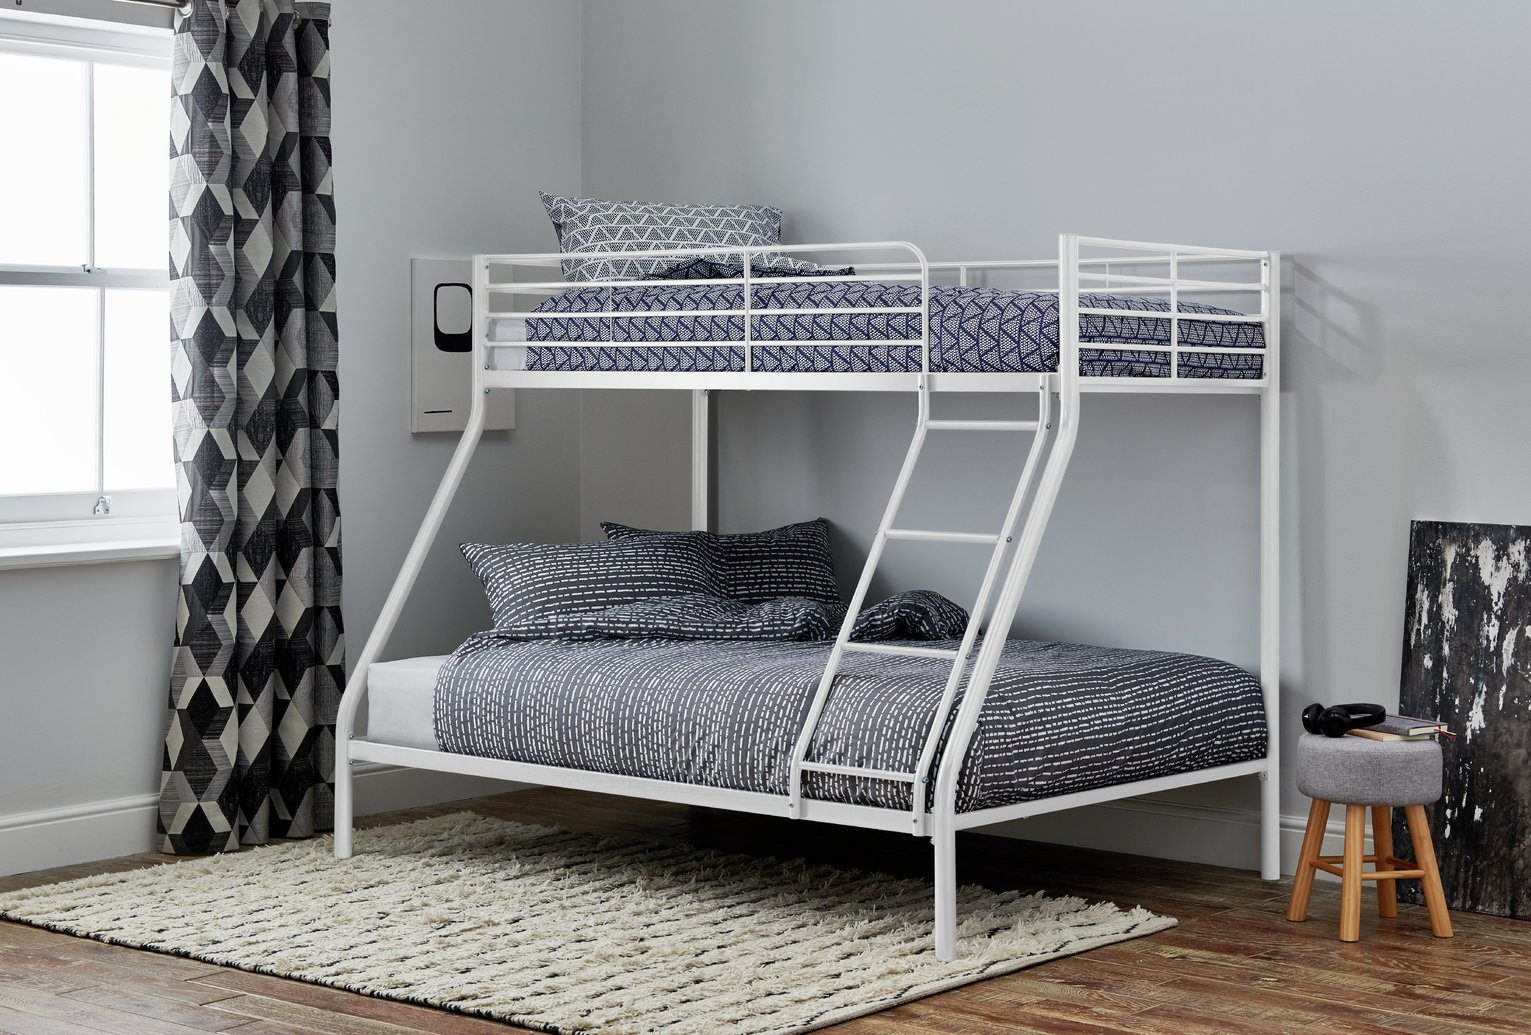 Argos Home Willen Triple Metal Bunk Bed - White